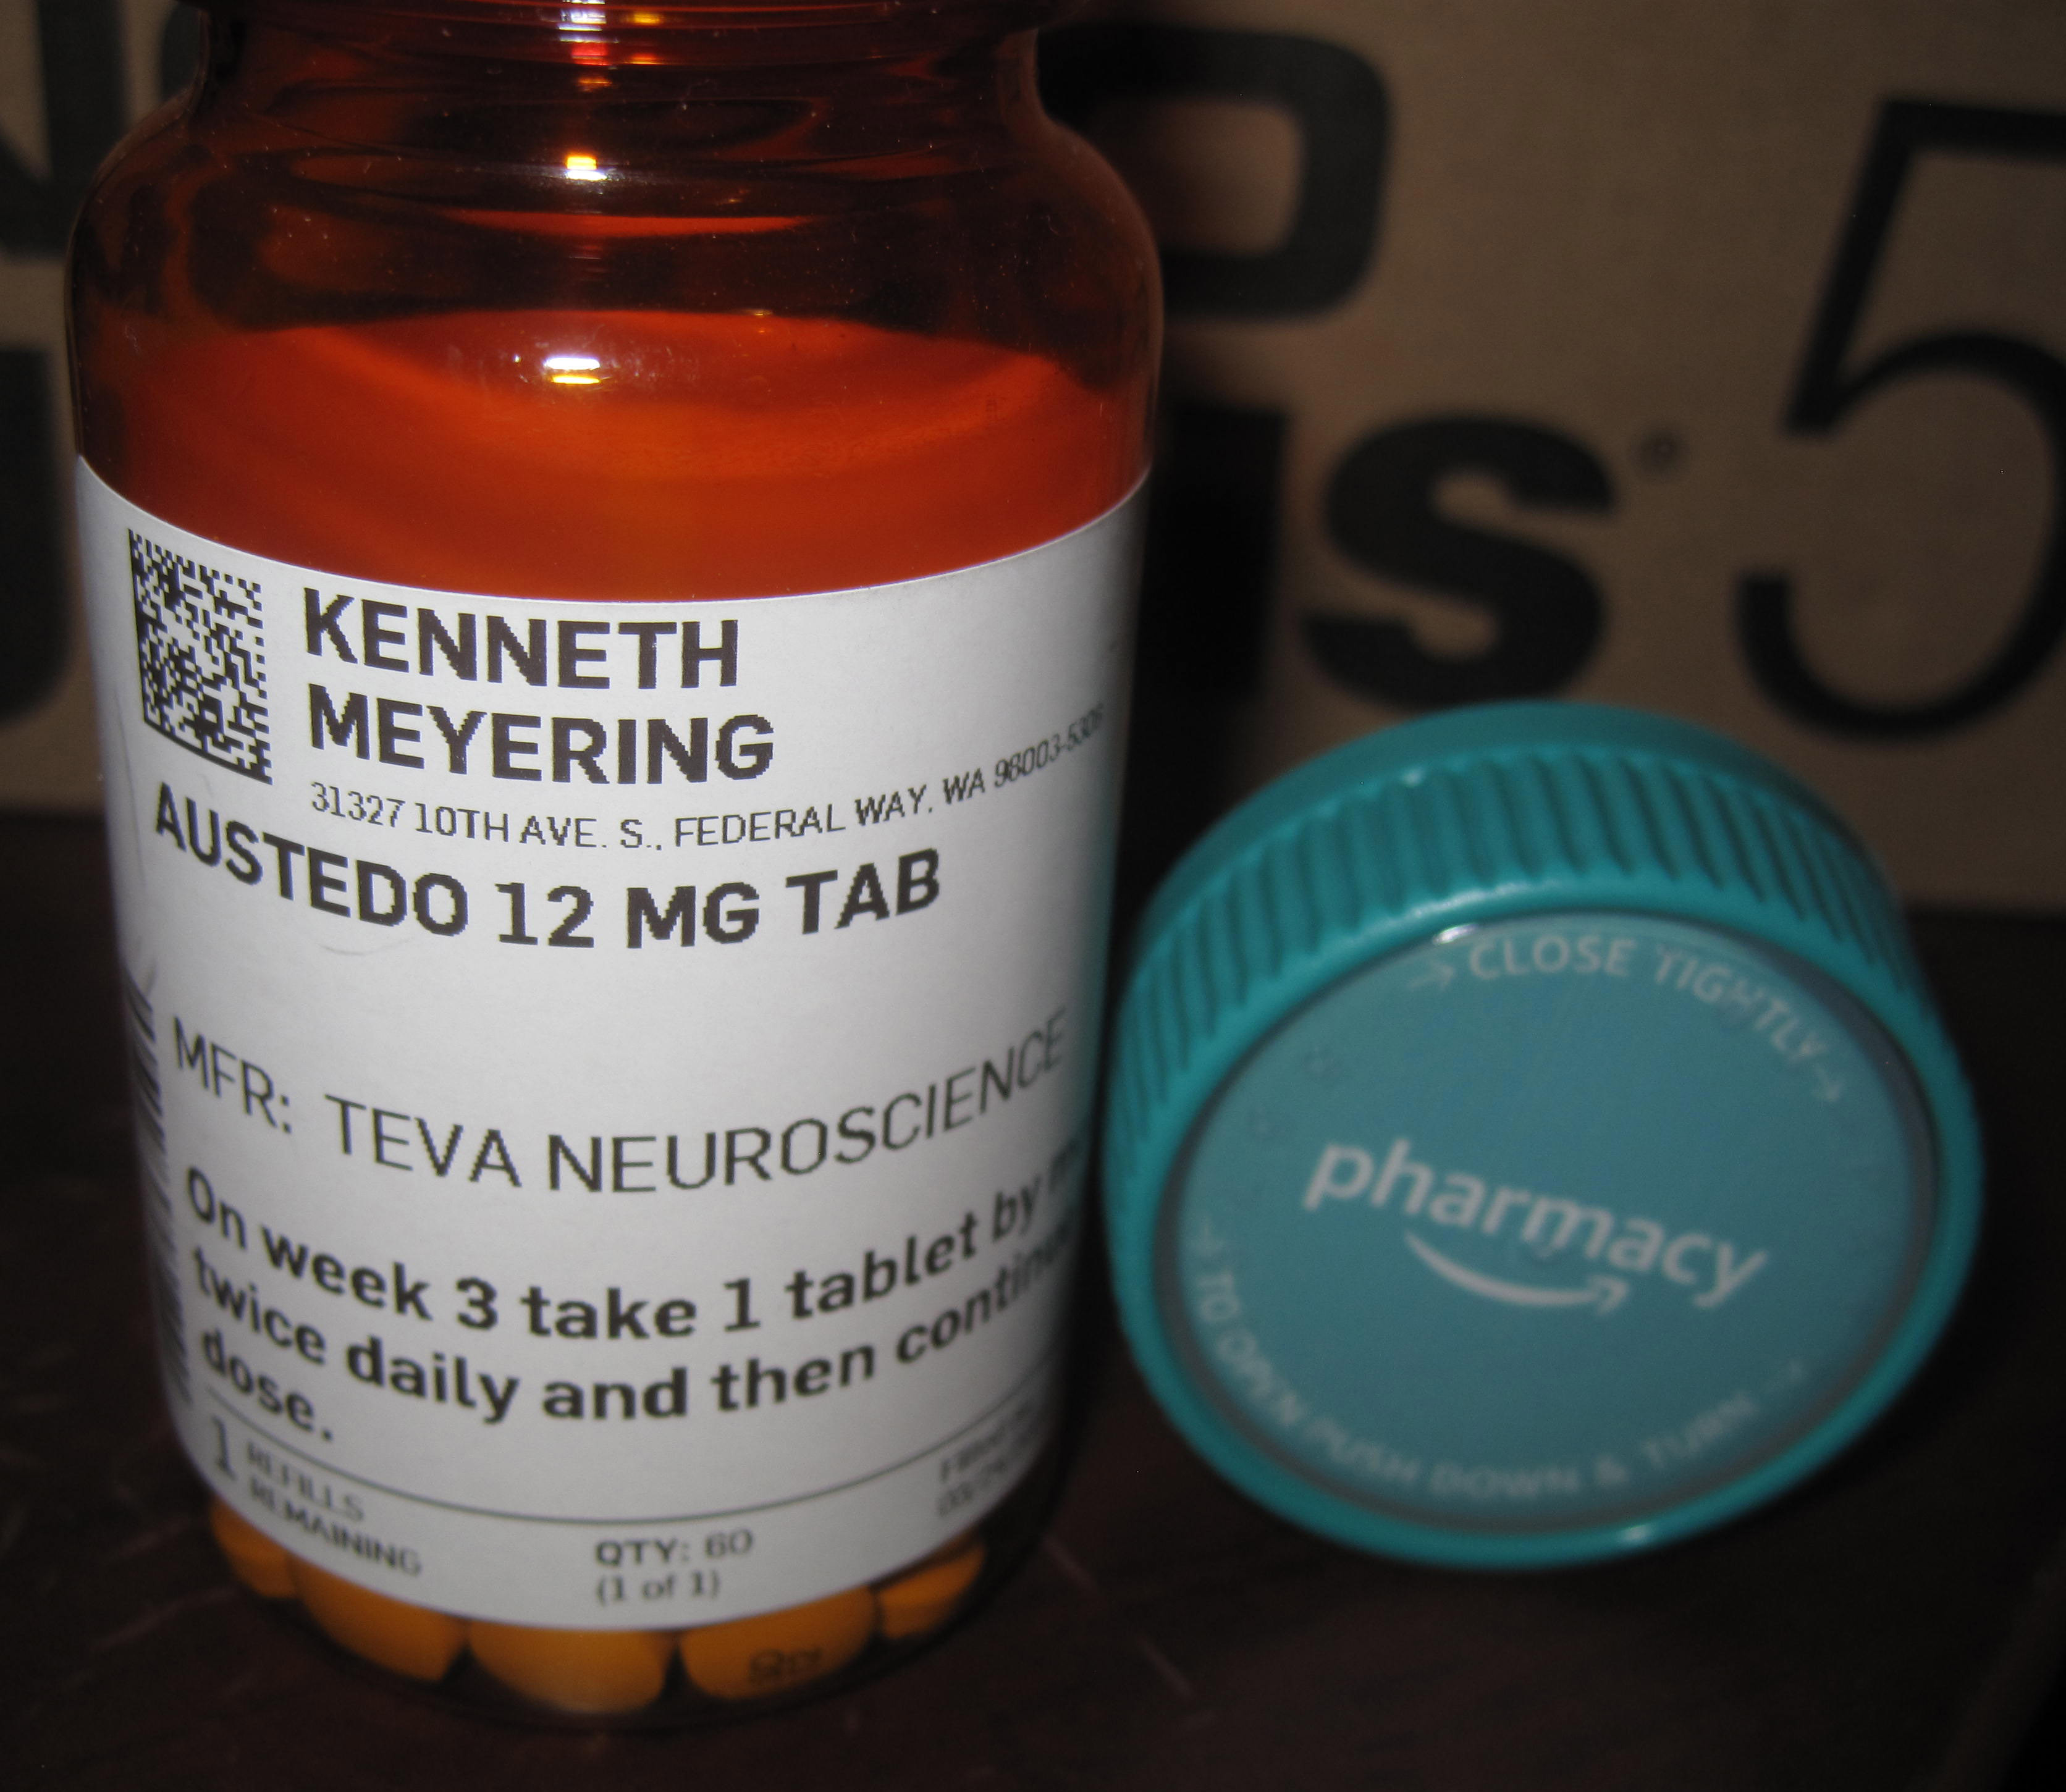 Ken's Austedo Prescription